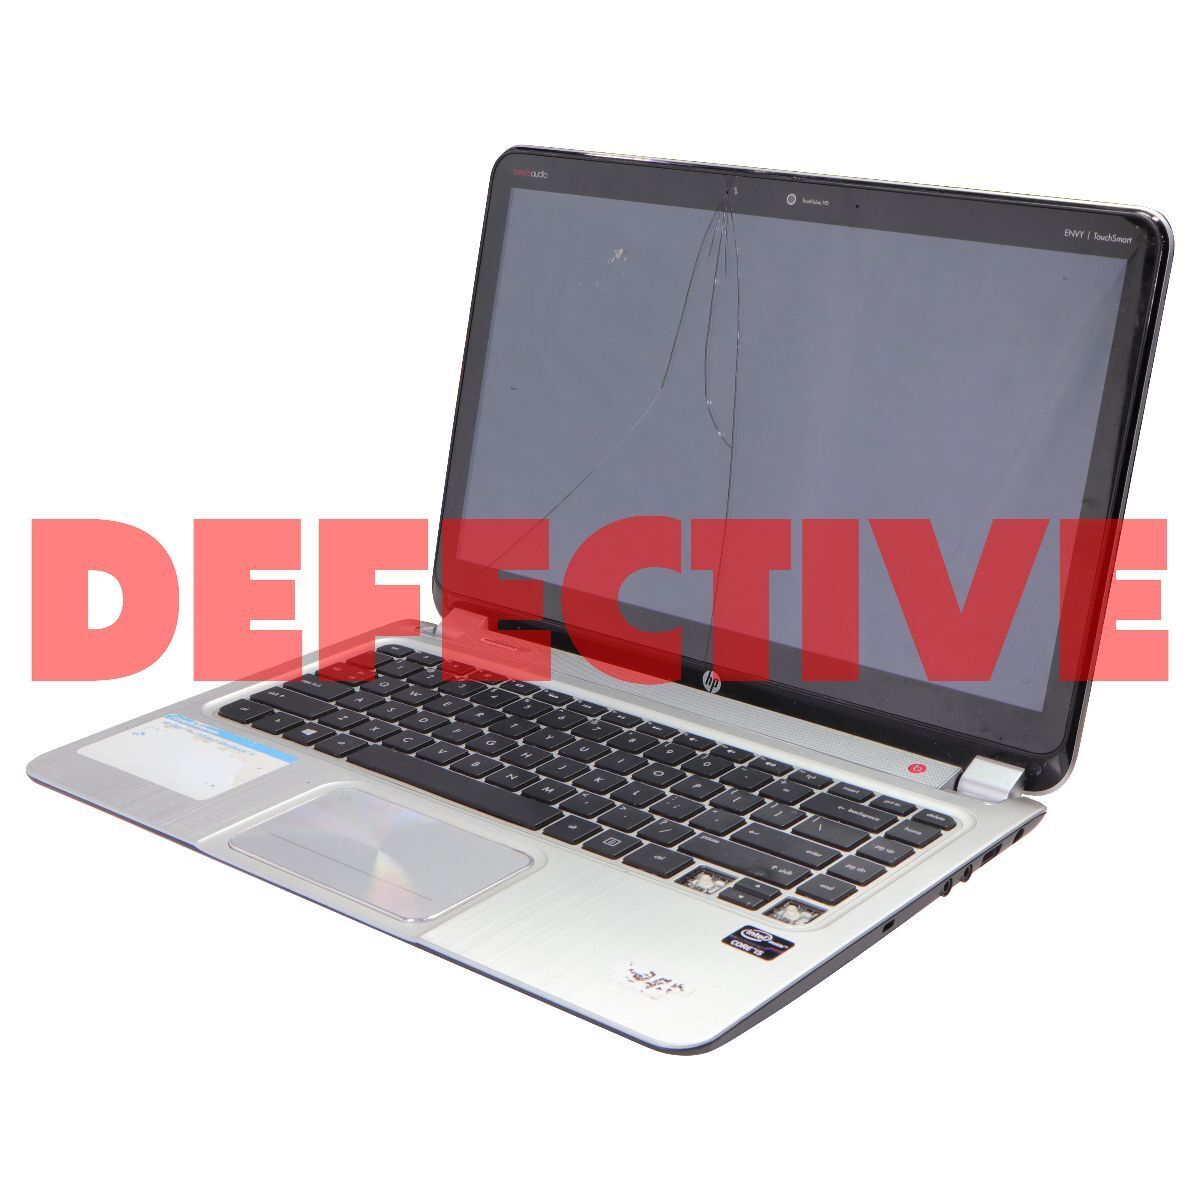 HP Envy TouchSmart UltraBook (4-1115dx) i5-3317U/500GB HDD/4 GB RAM/8 Home/Black